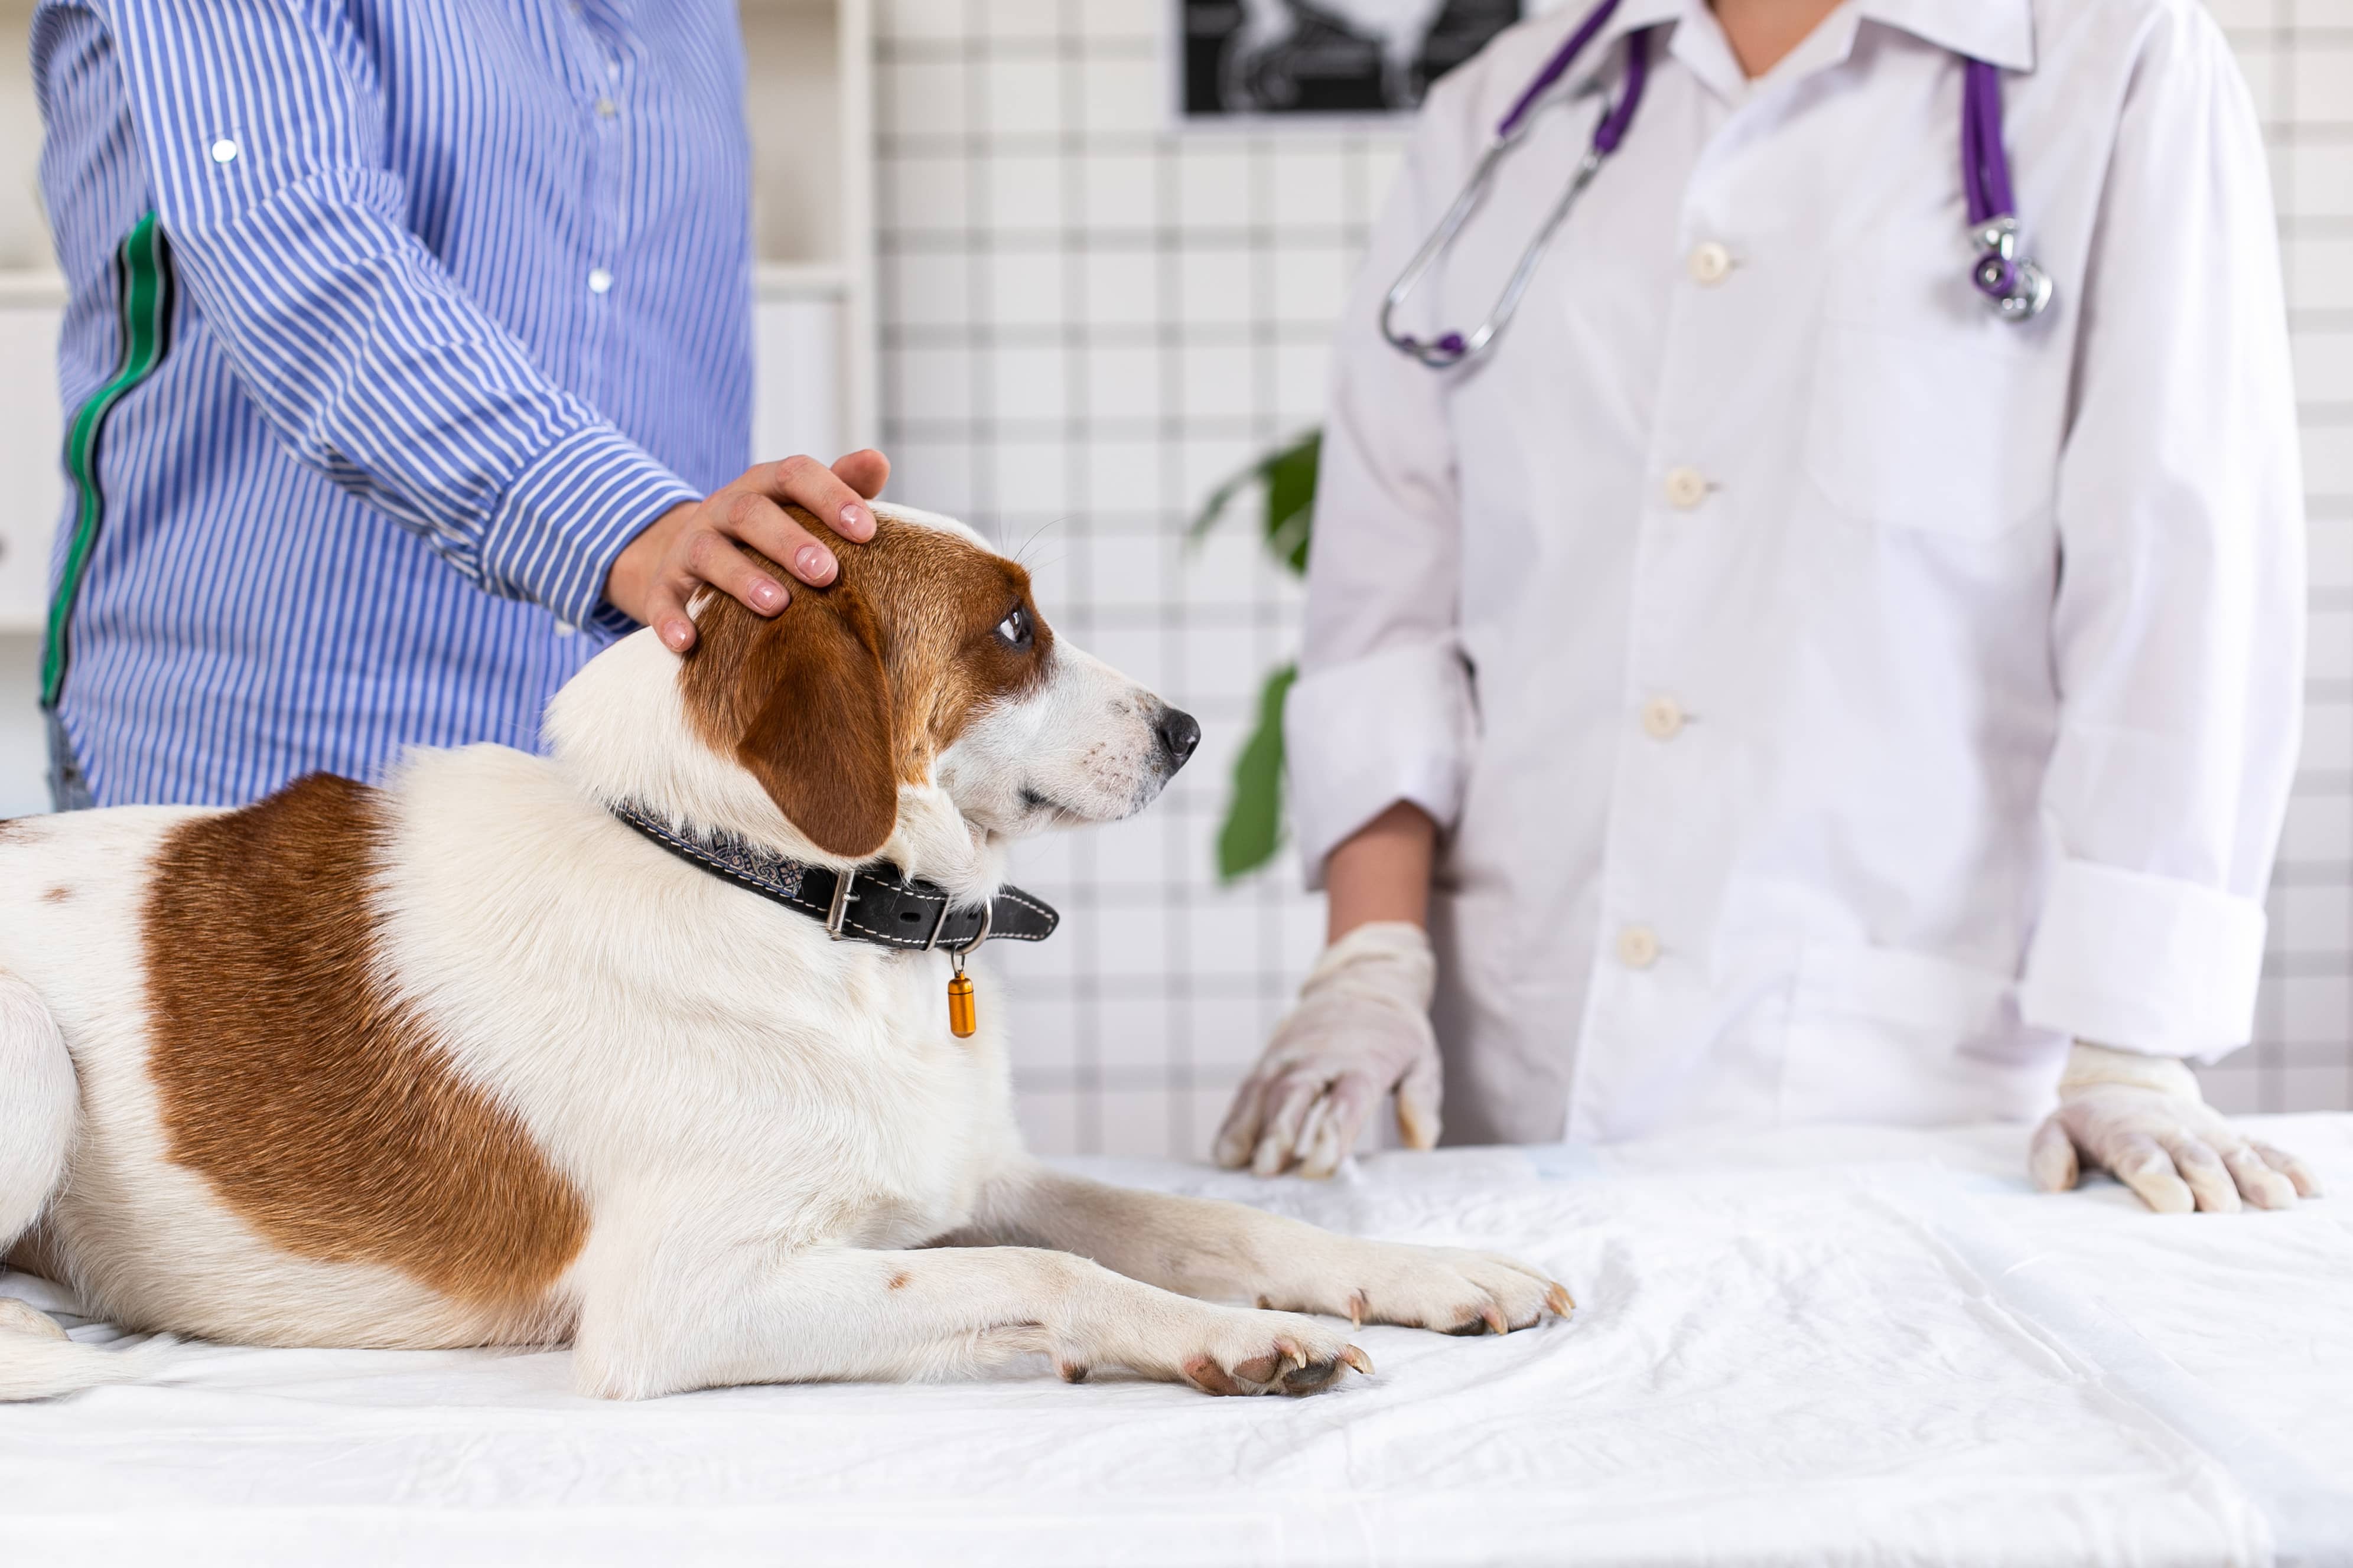 Owner petting dog at vet